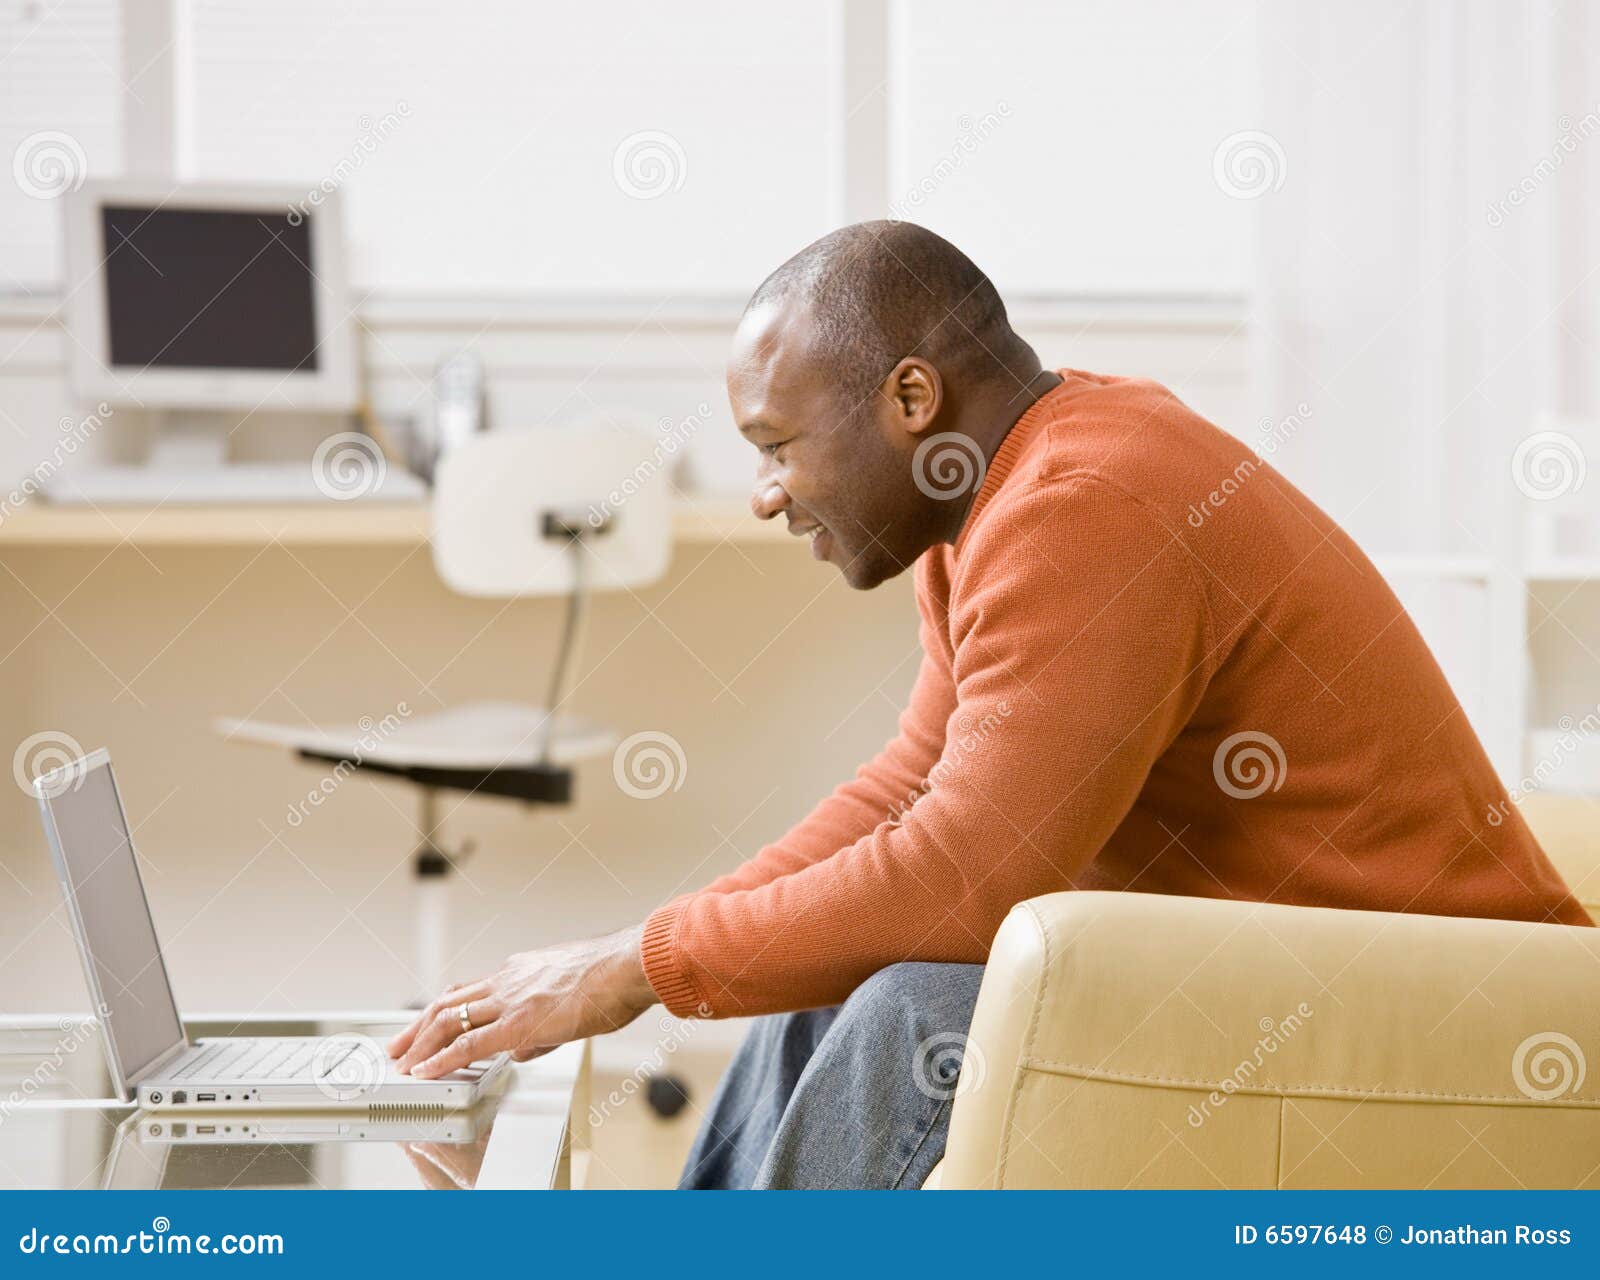 man typing on laptop in livingroom